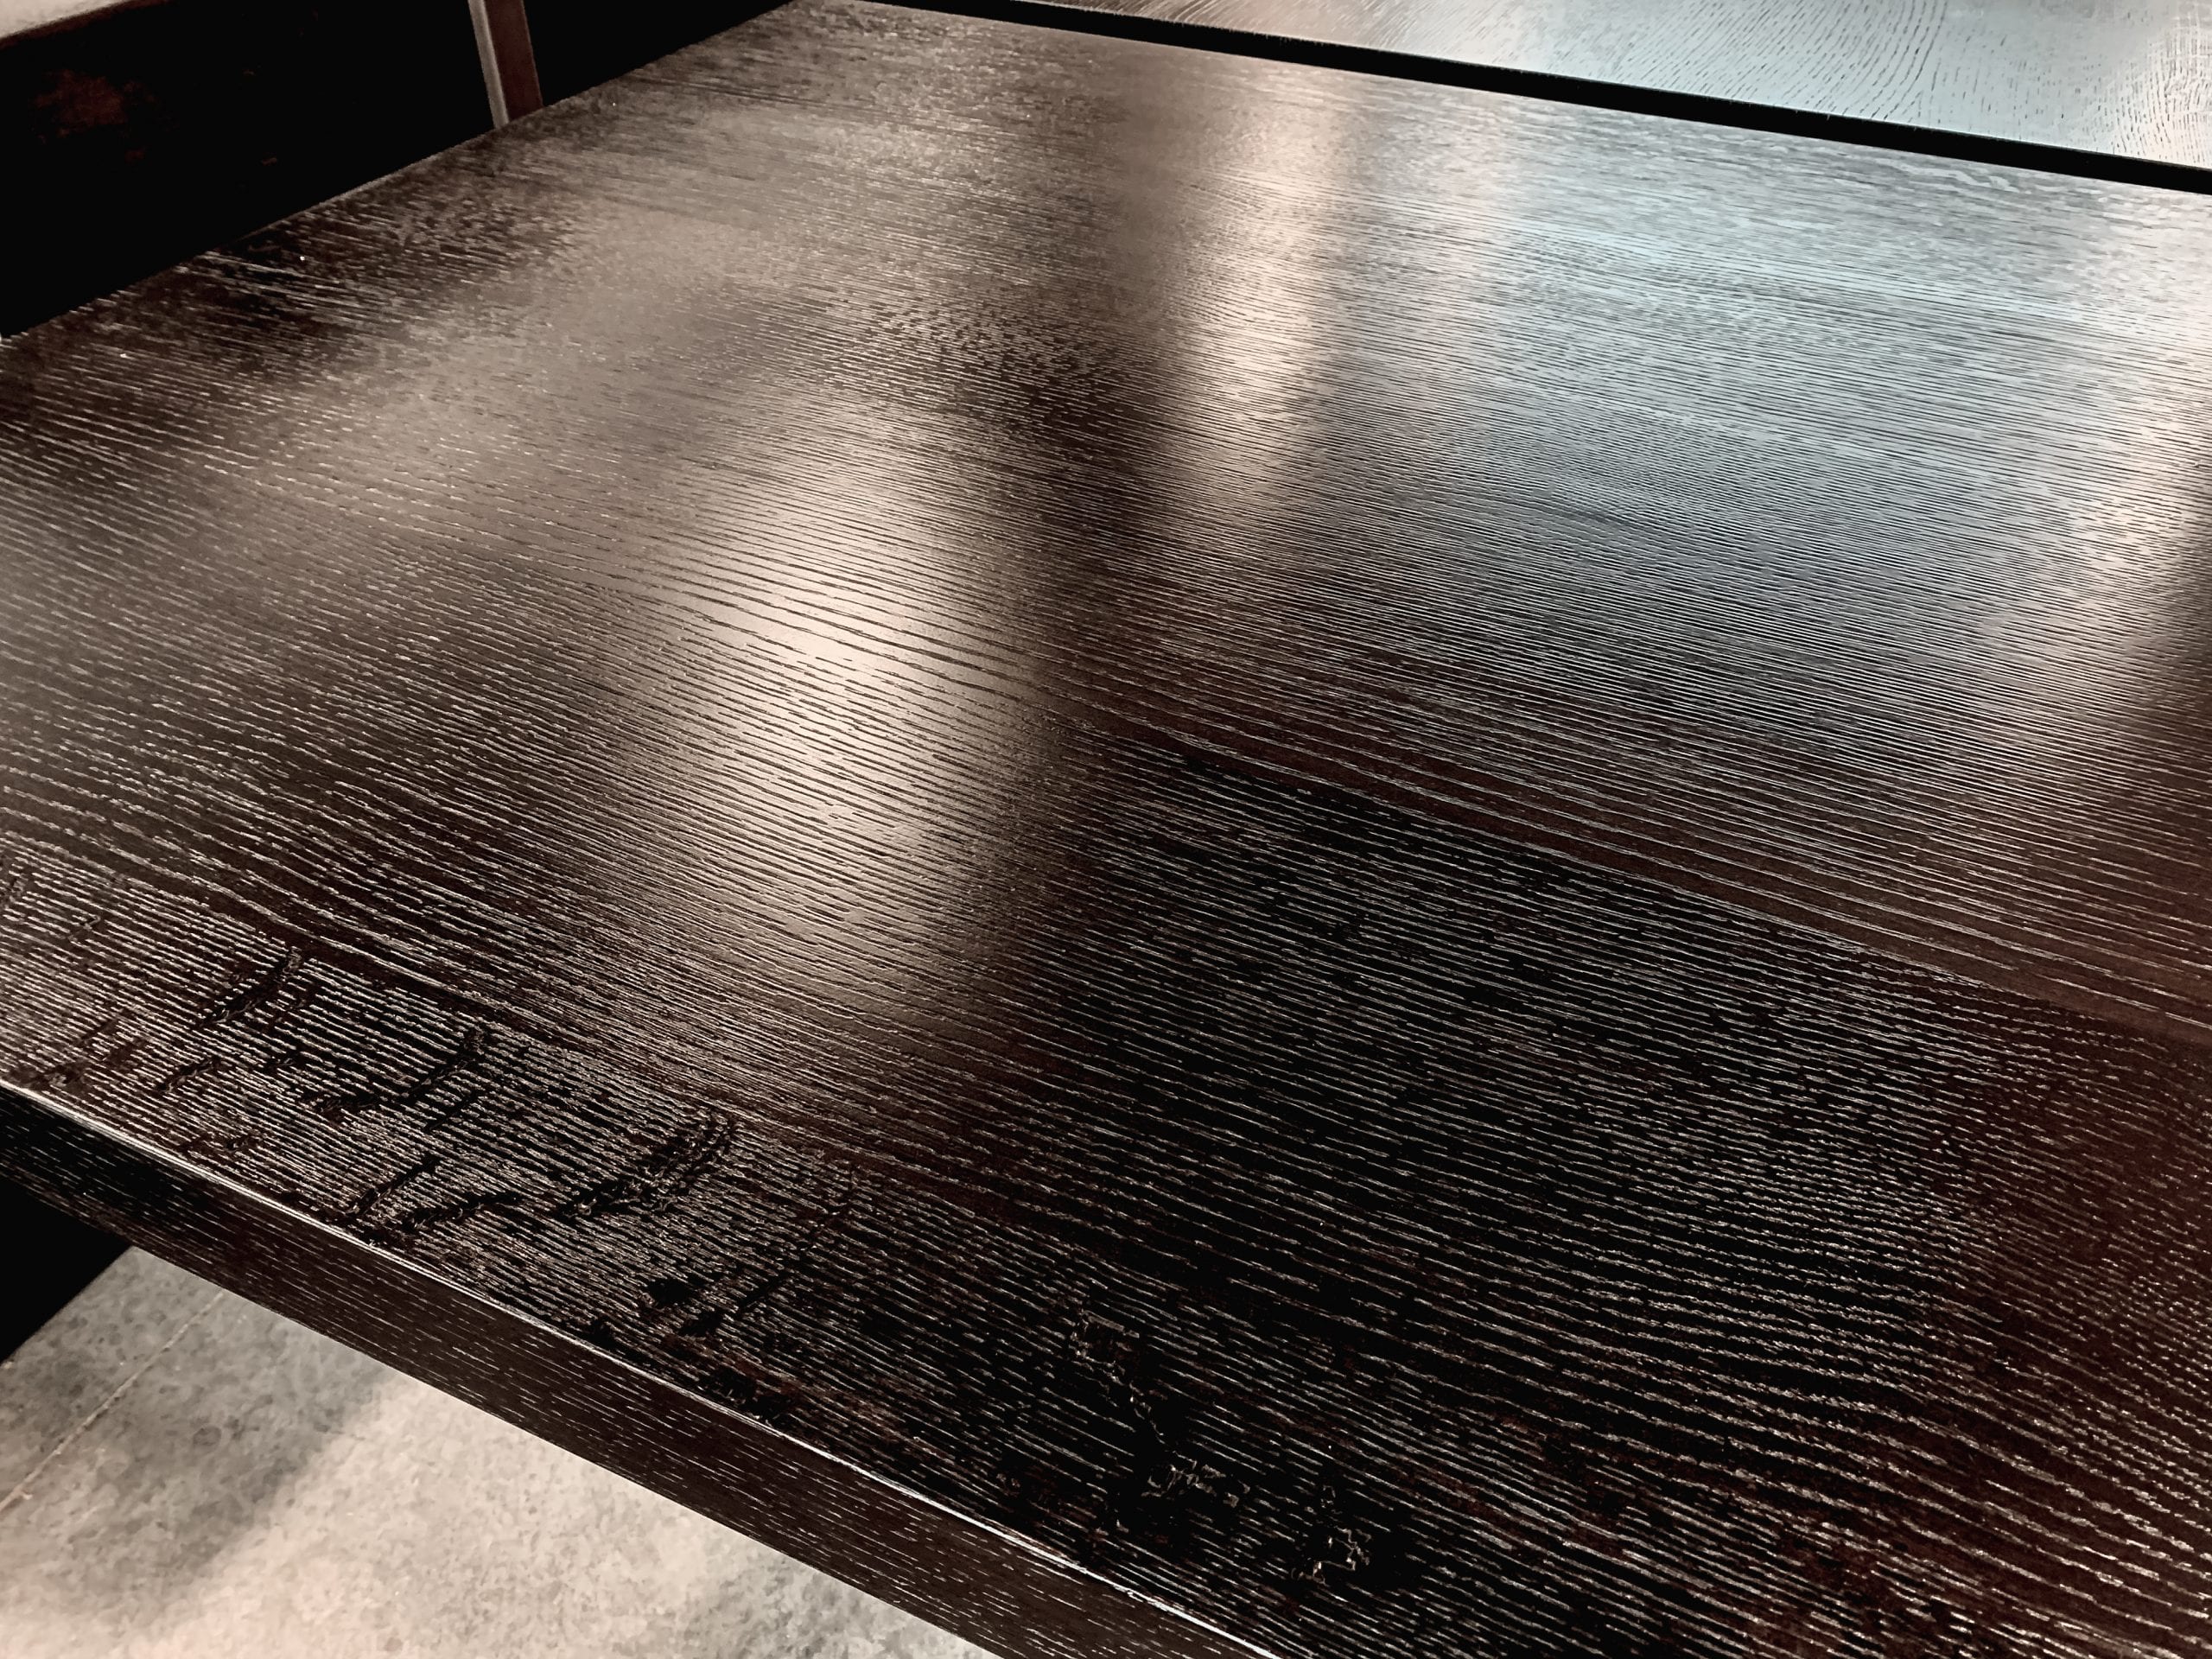 Textured, ebonized oak and iron table details